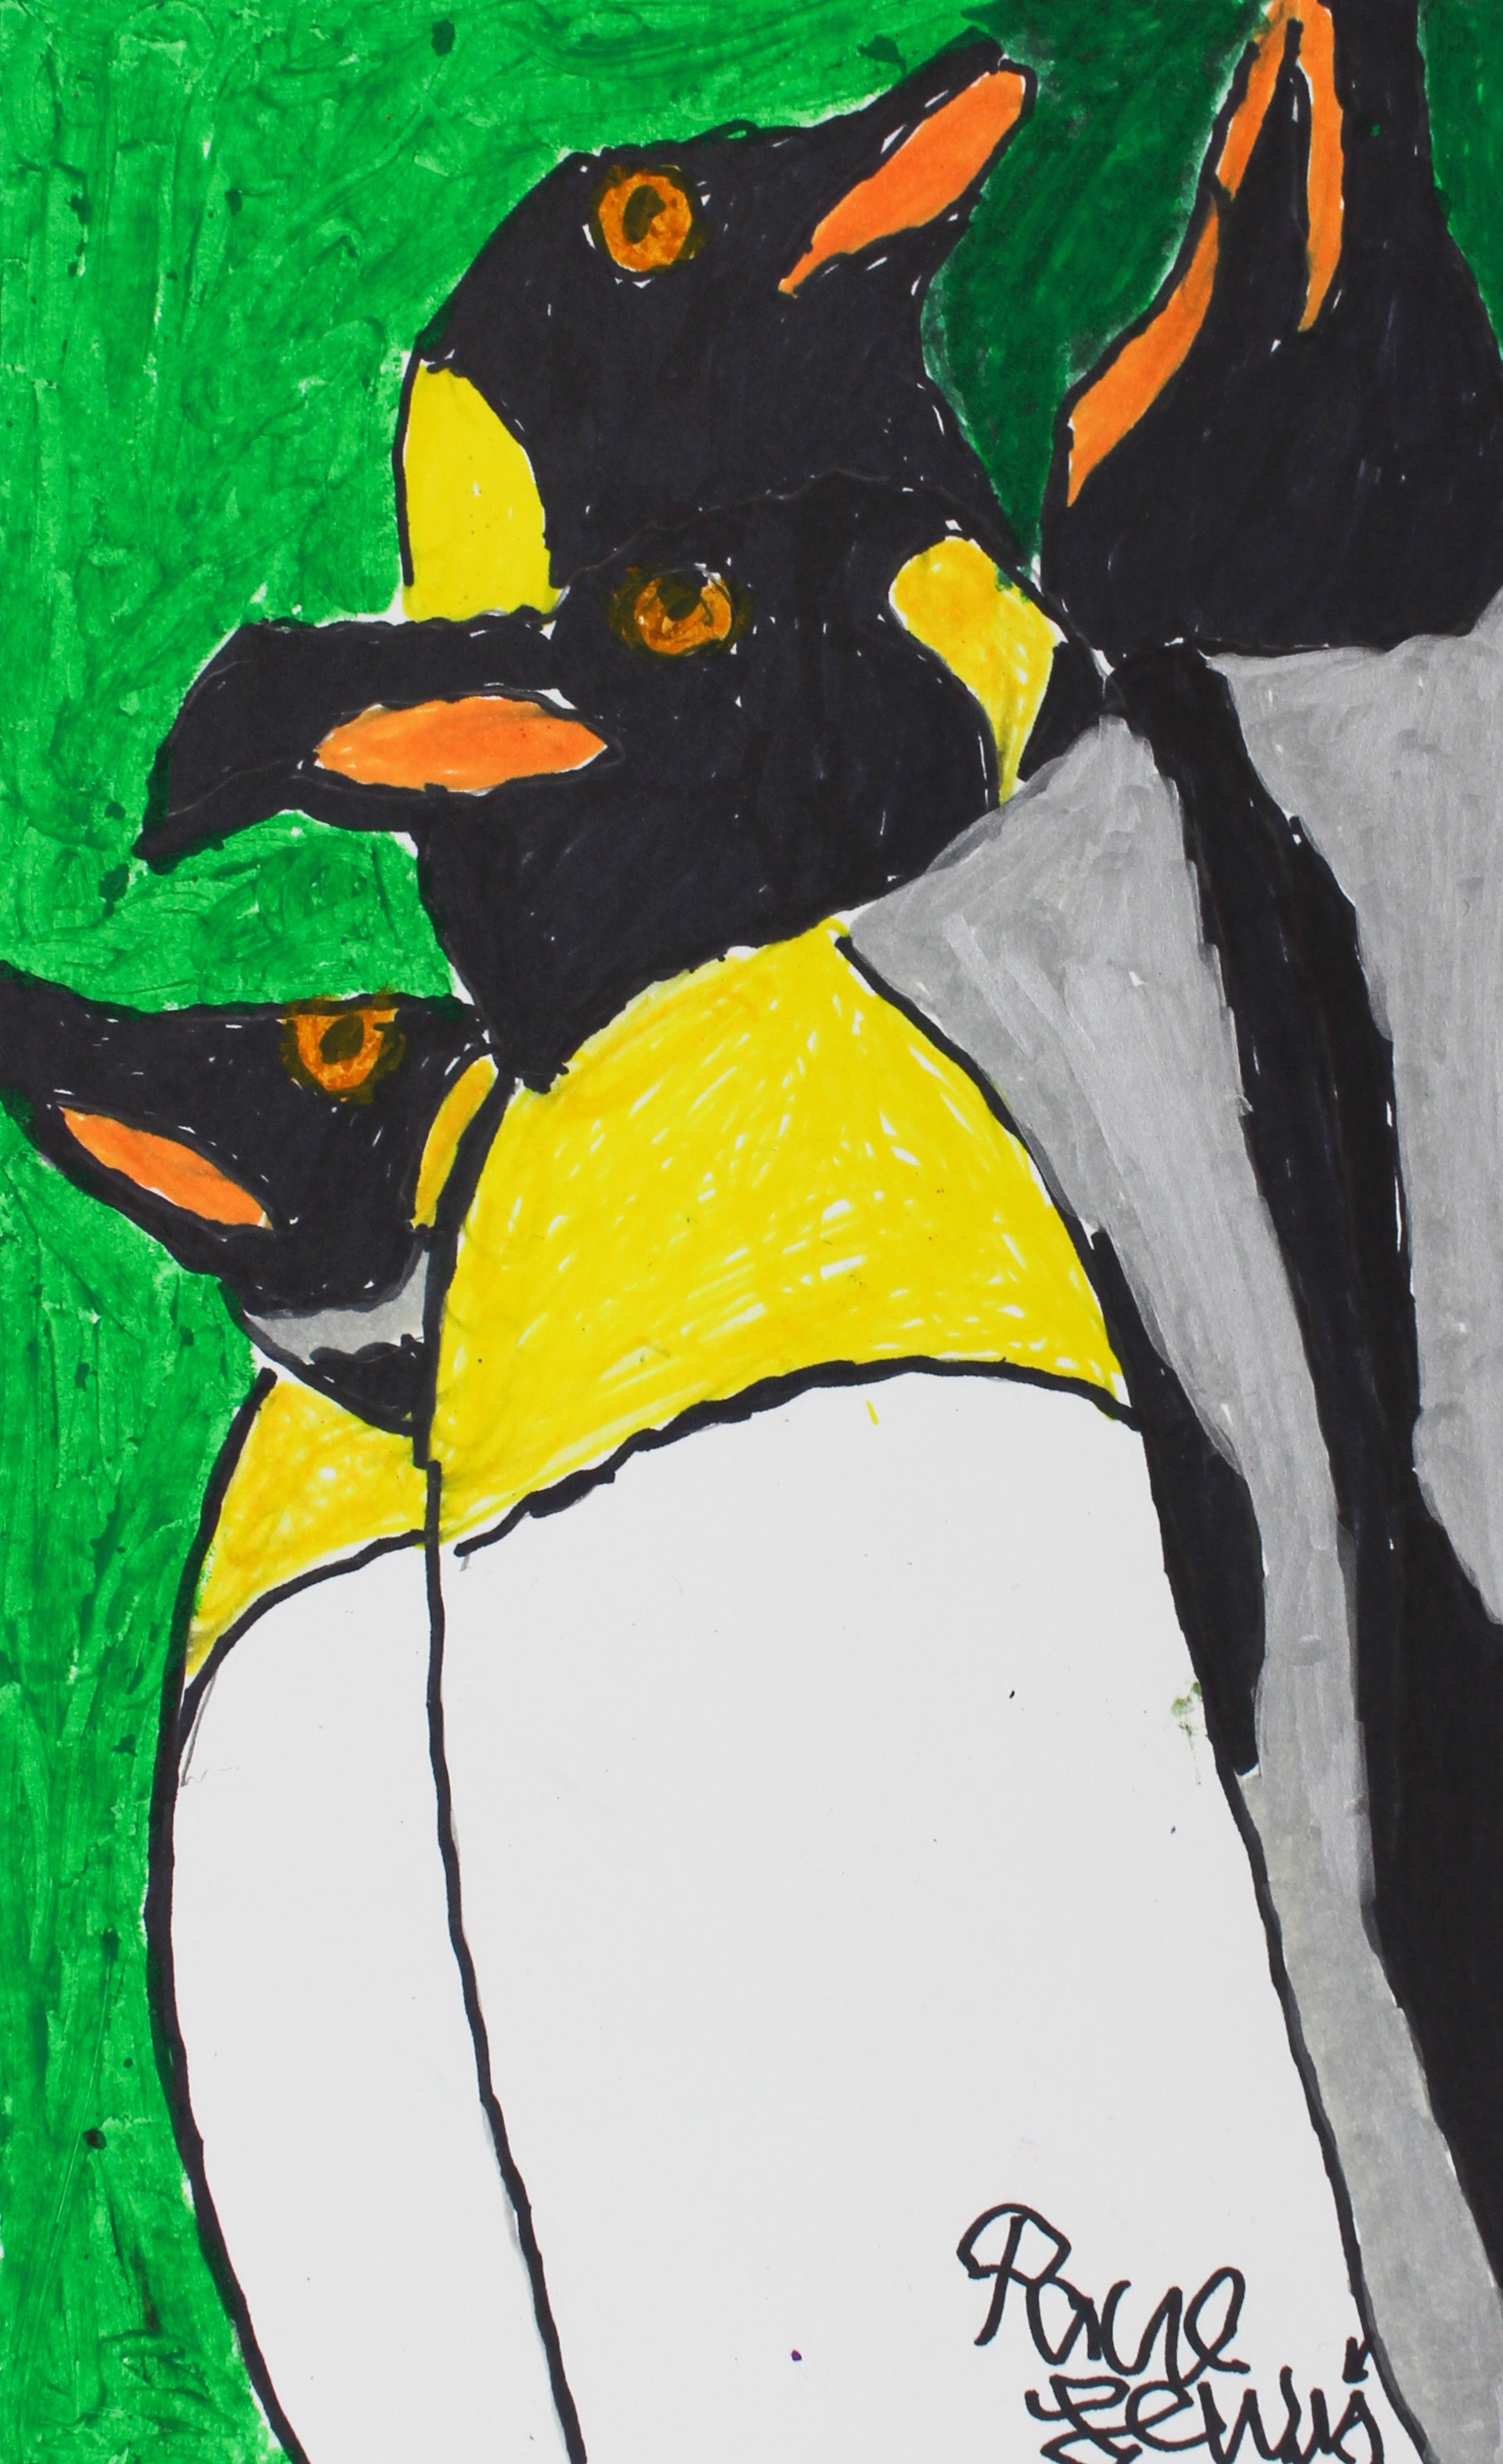 Penguins by Paul Lewis